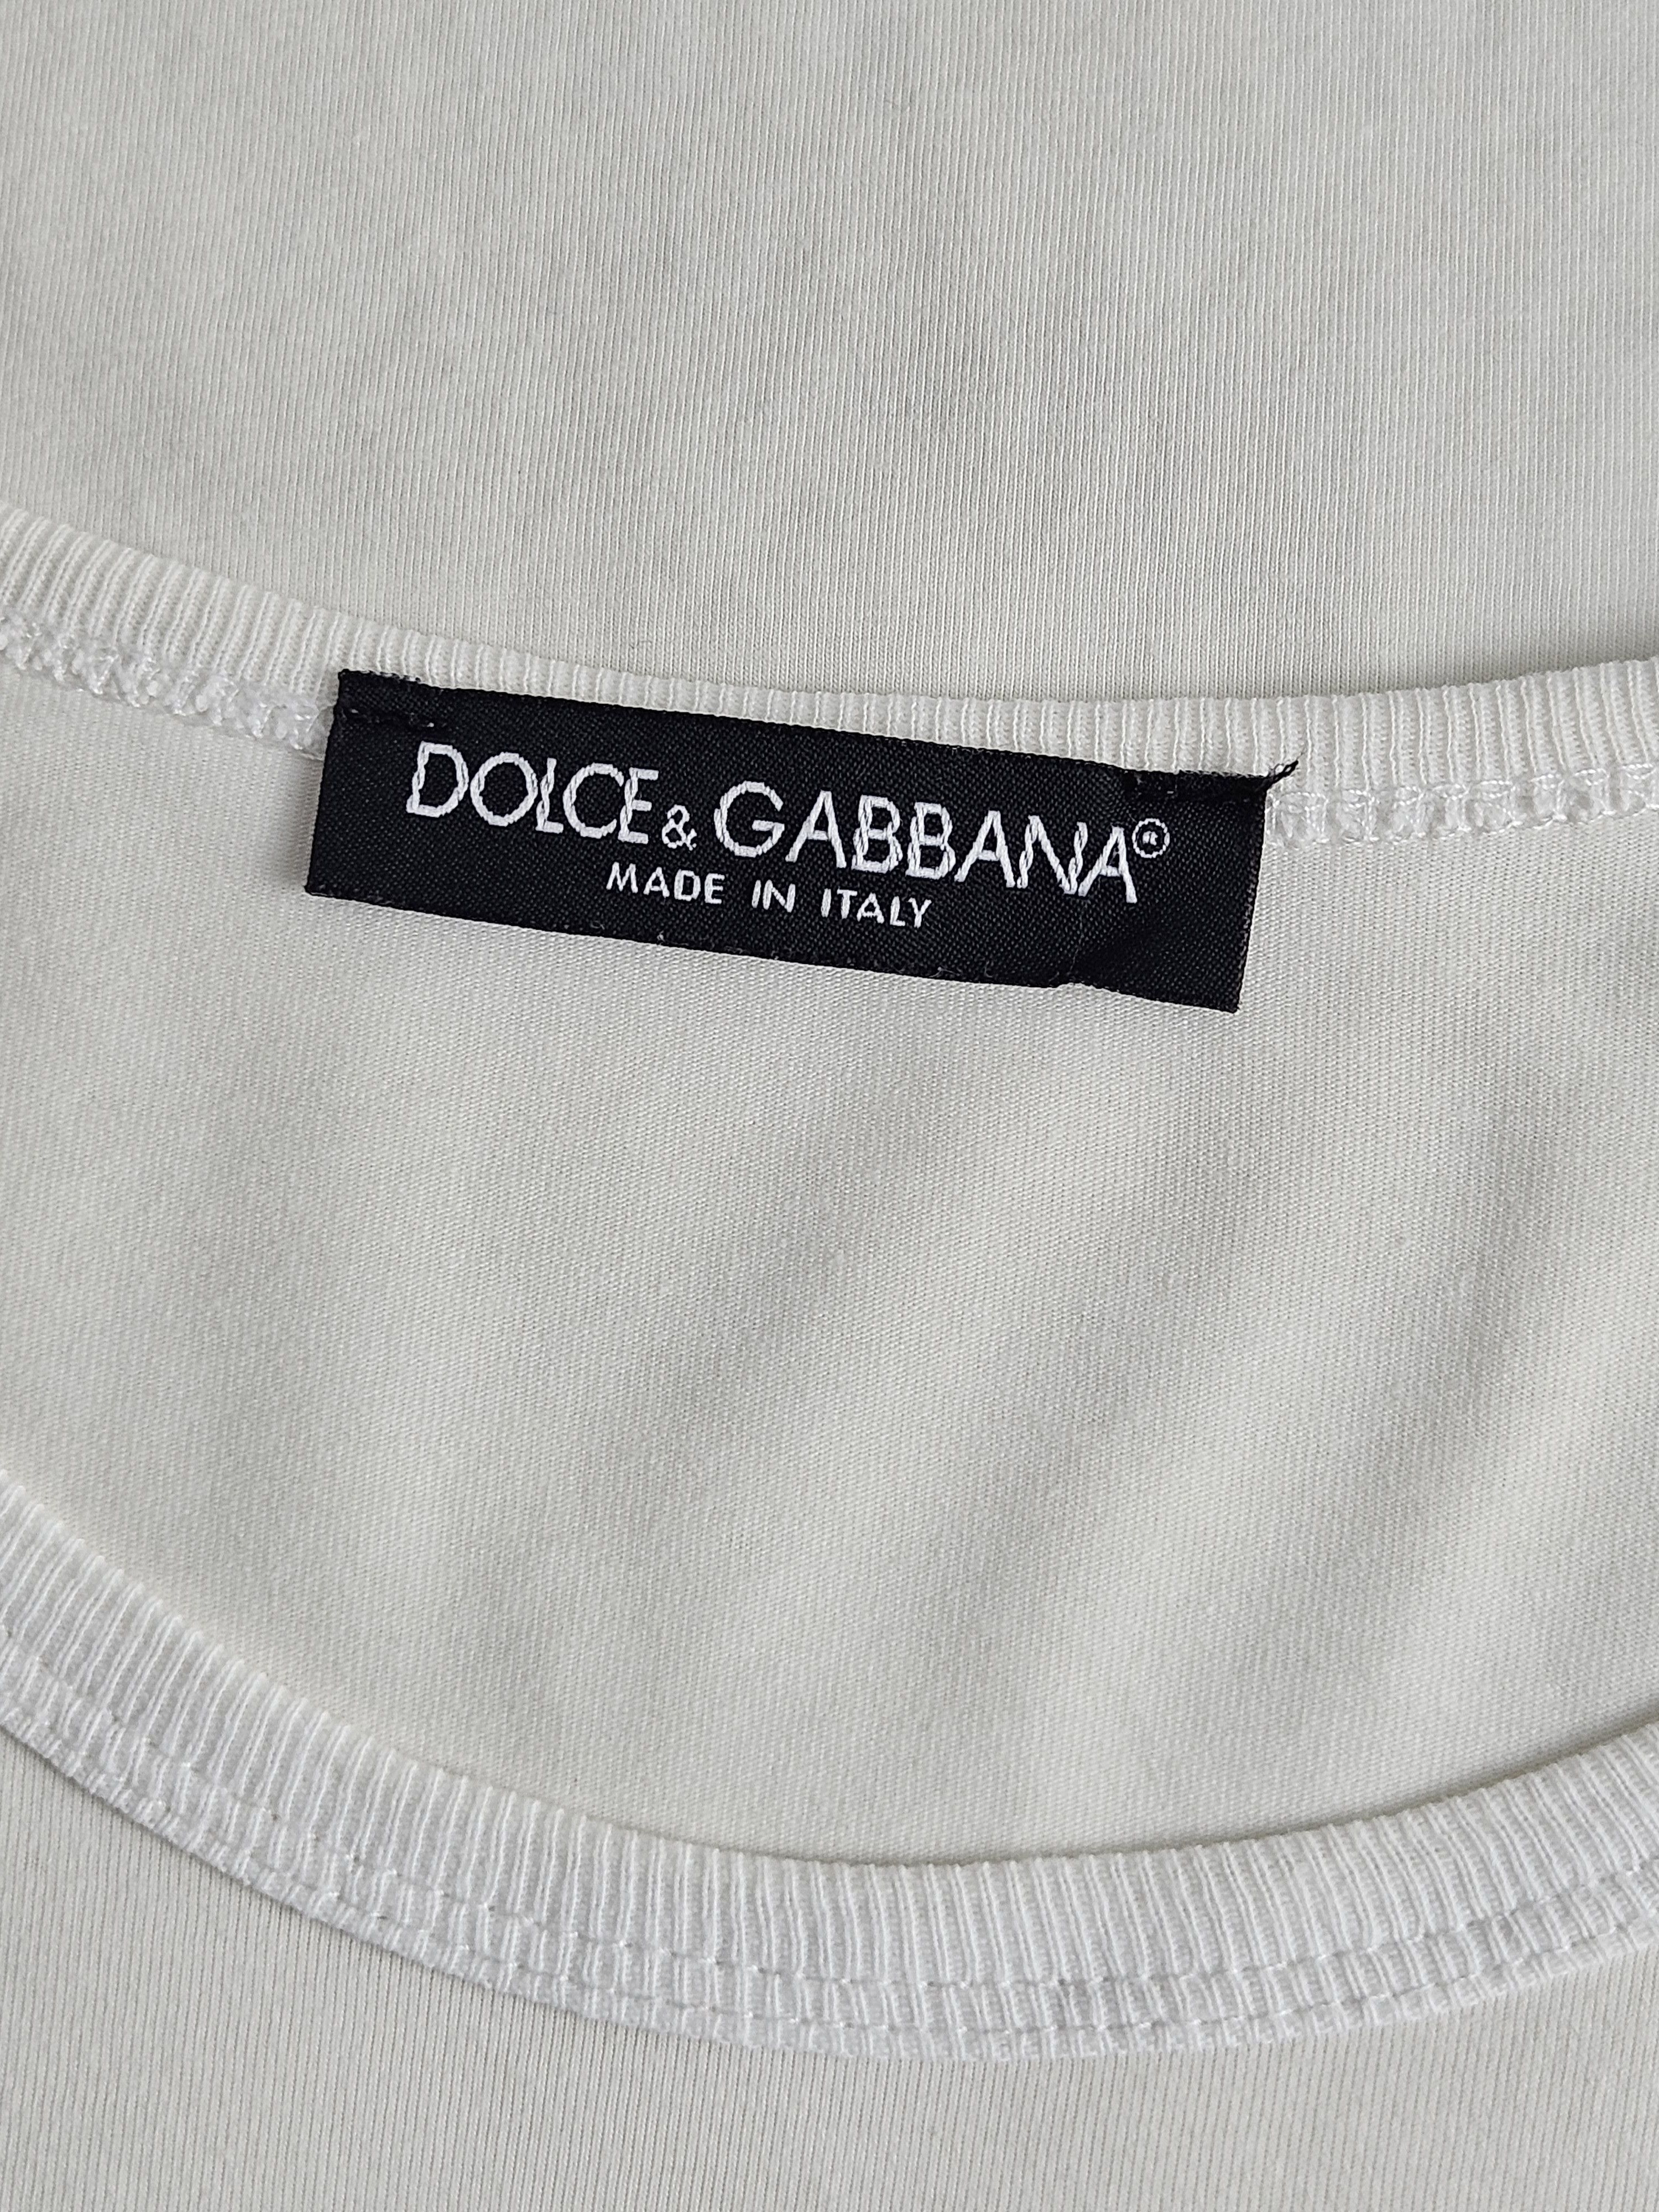 Dolce & Gabbana Al Pacino The Godfather Shirt - 4